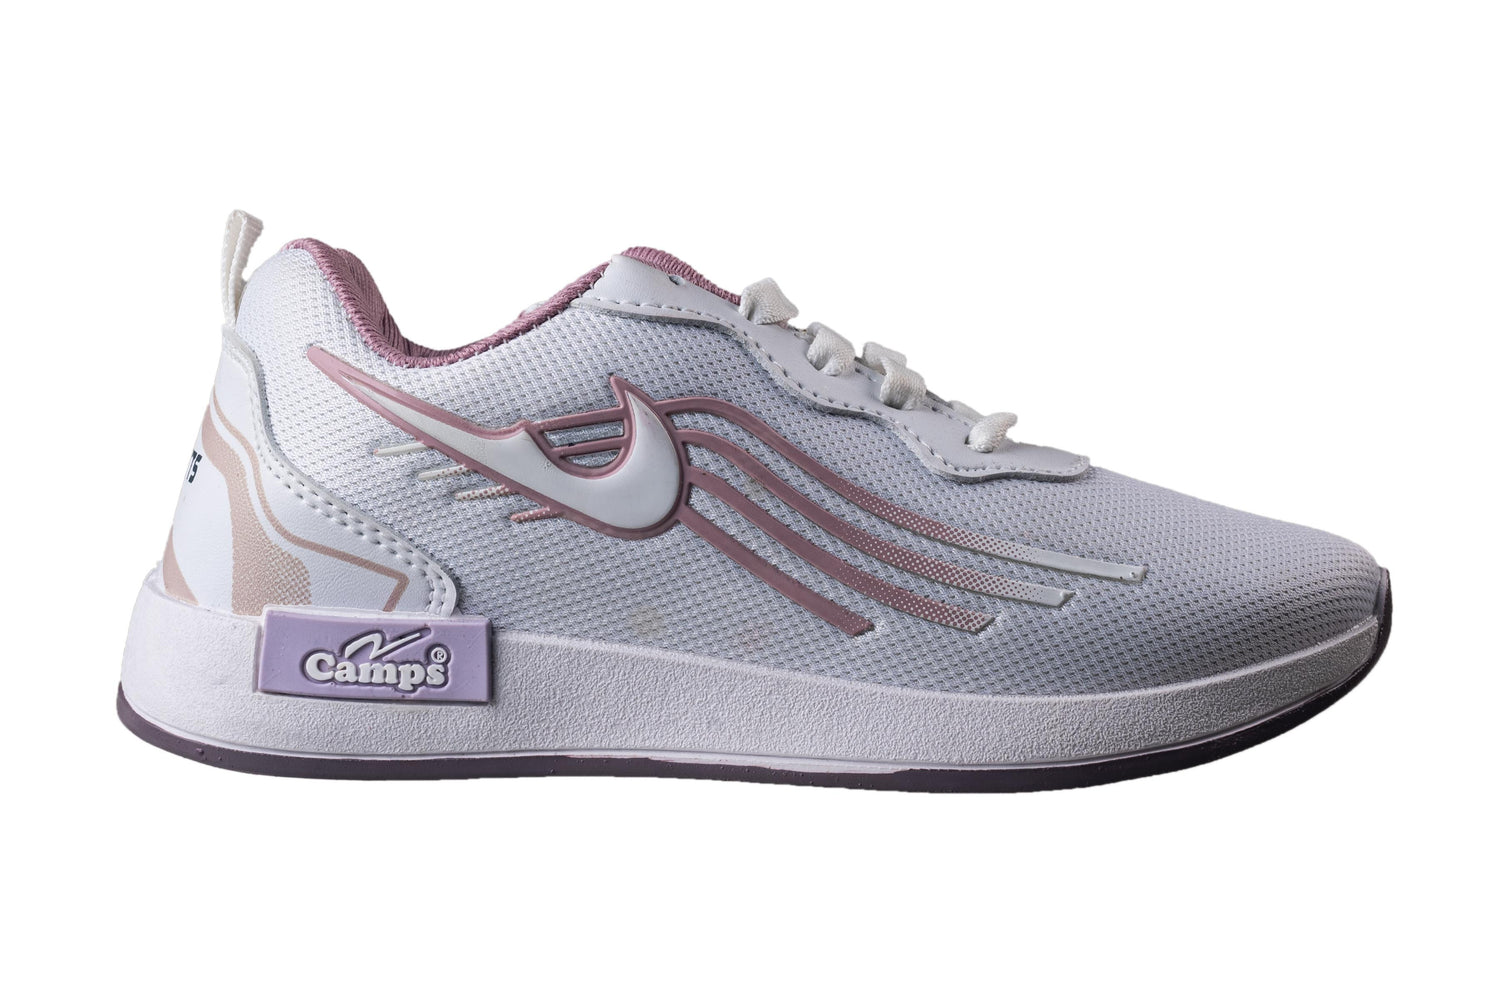 Camps Ladies White / Purple Sports Shoe